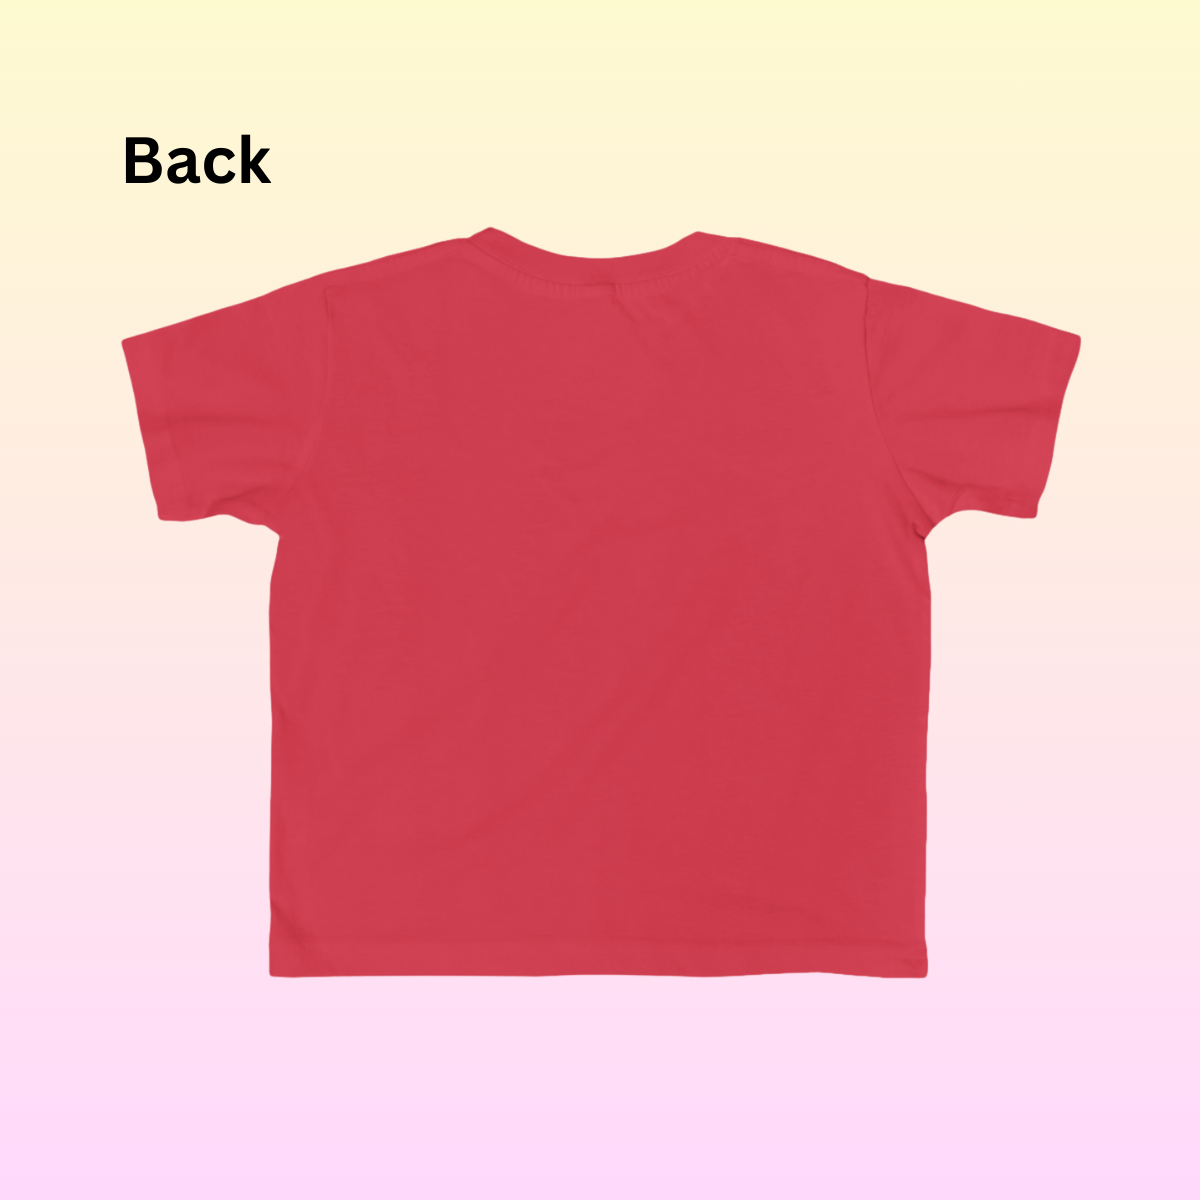 Red Toddler Cycling Fan Jersey T-Shirt